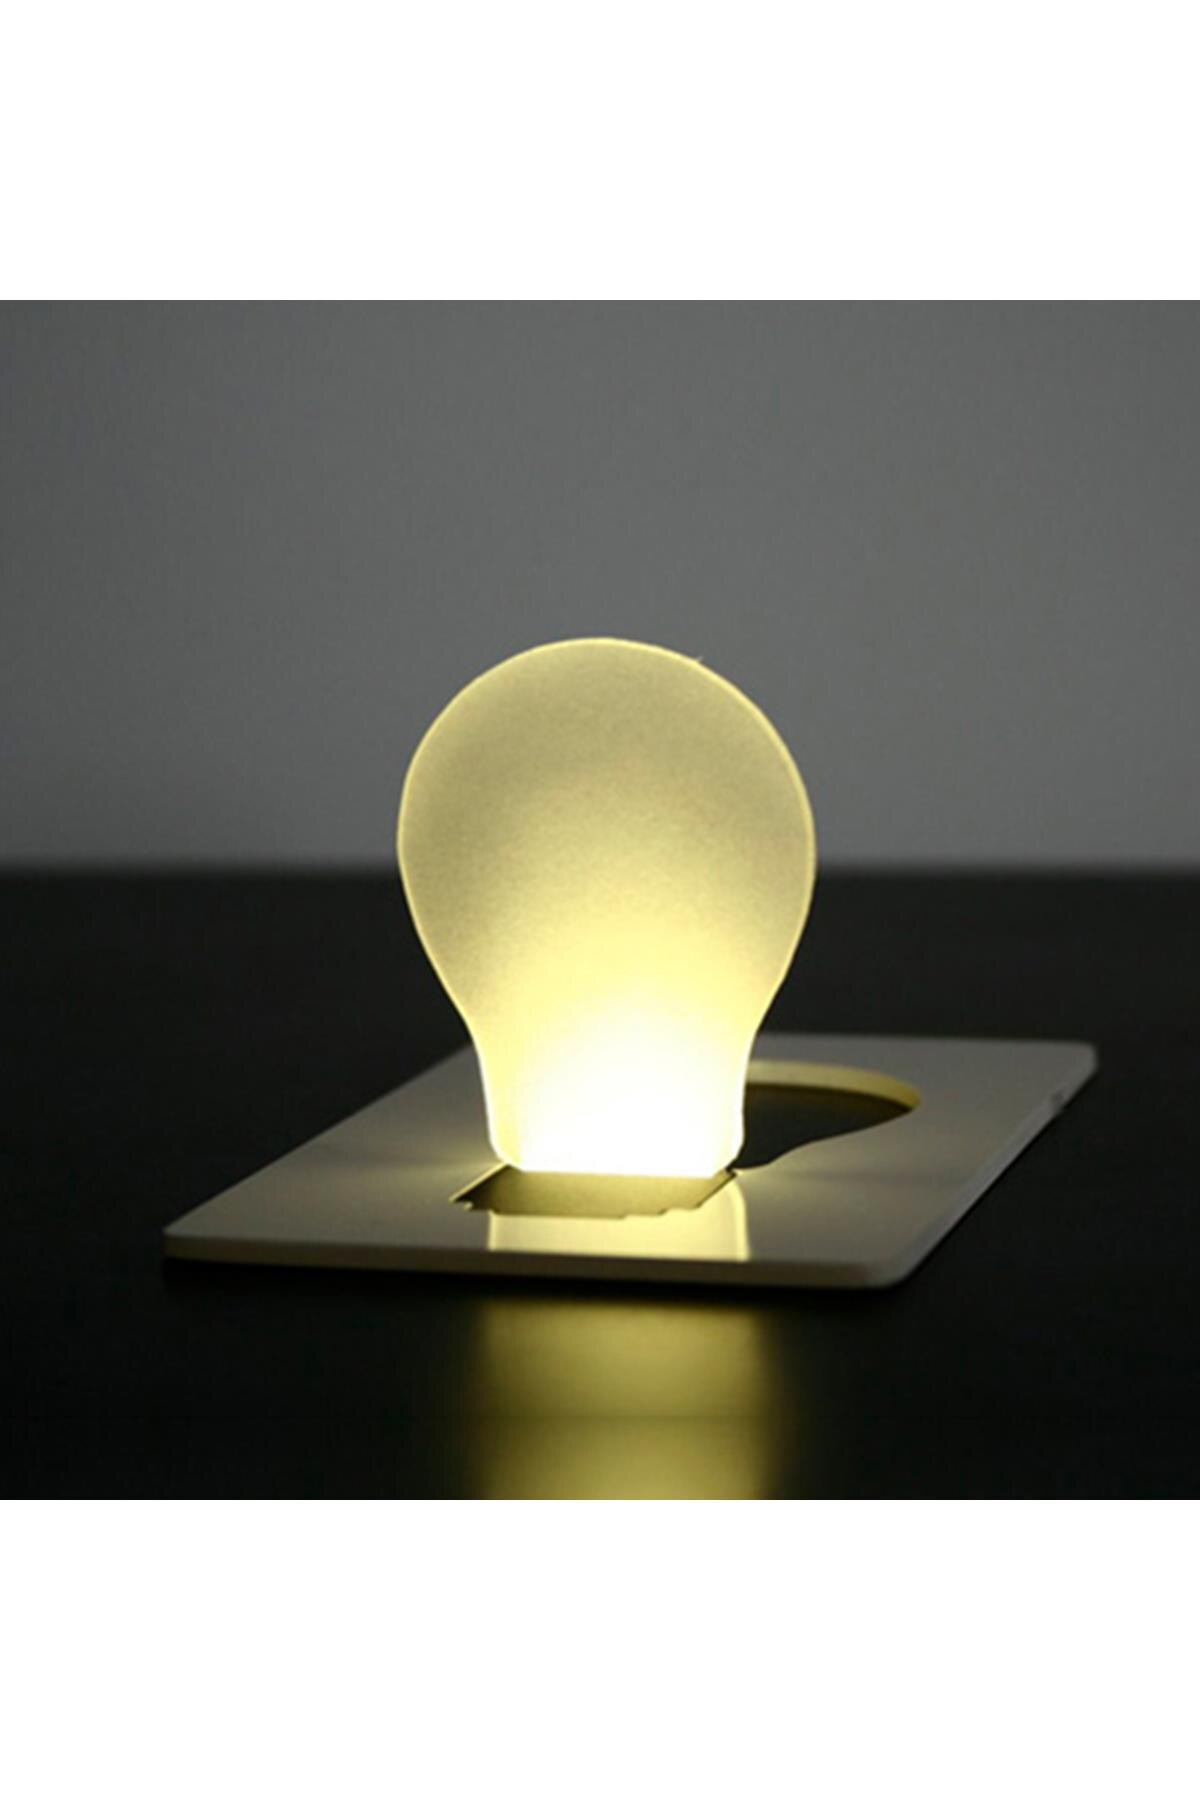 Zaklamp-Creditcard Vormige Pocket Zaklamp Lamp